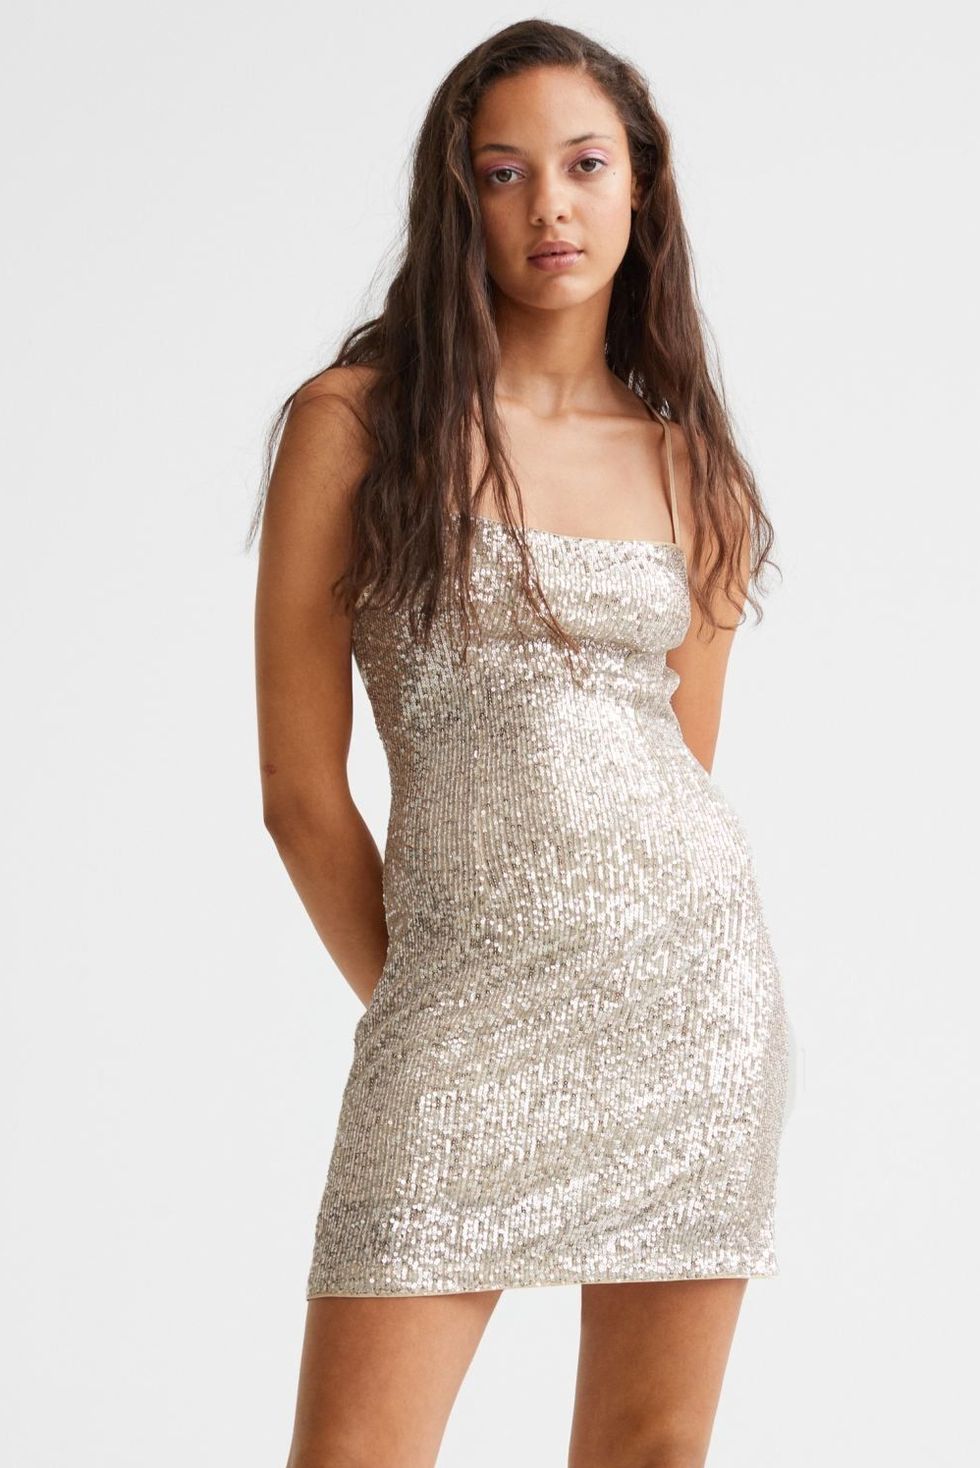 Nicole Richie Wears A Glittery Micro Mini Dress